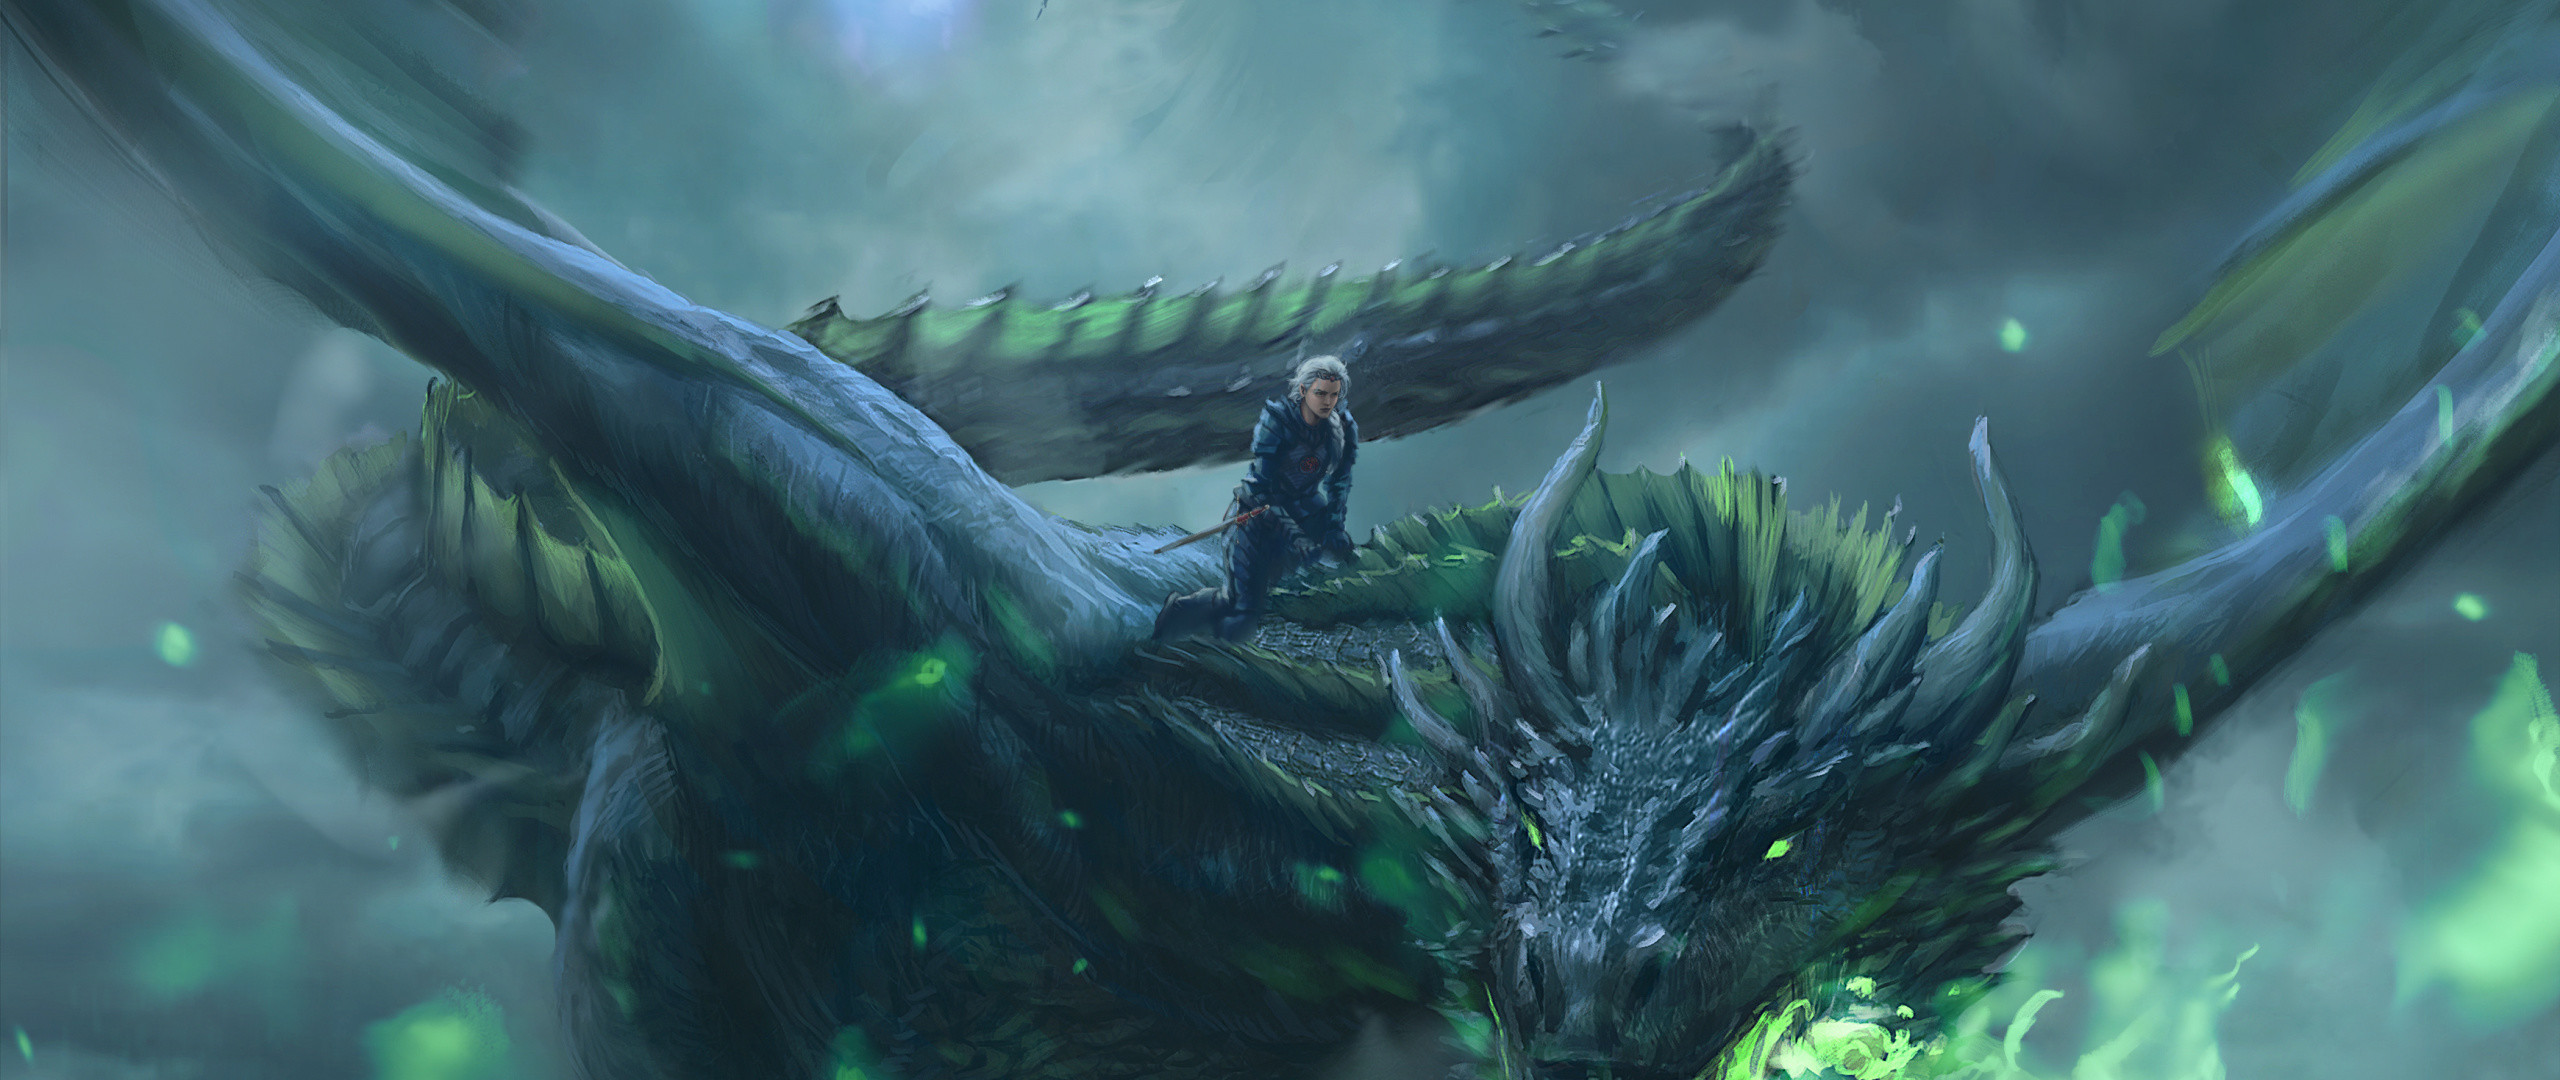 2560x1080 Daenerys Targaryen, Dragon ride, game of thrones, digital art,   wallpaper